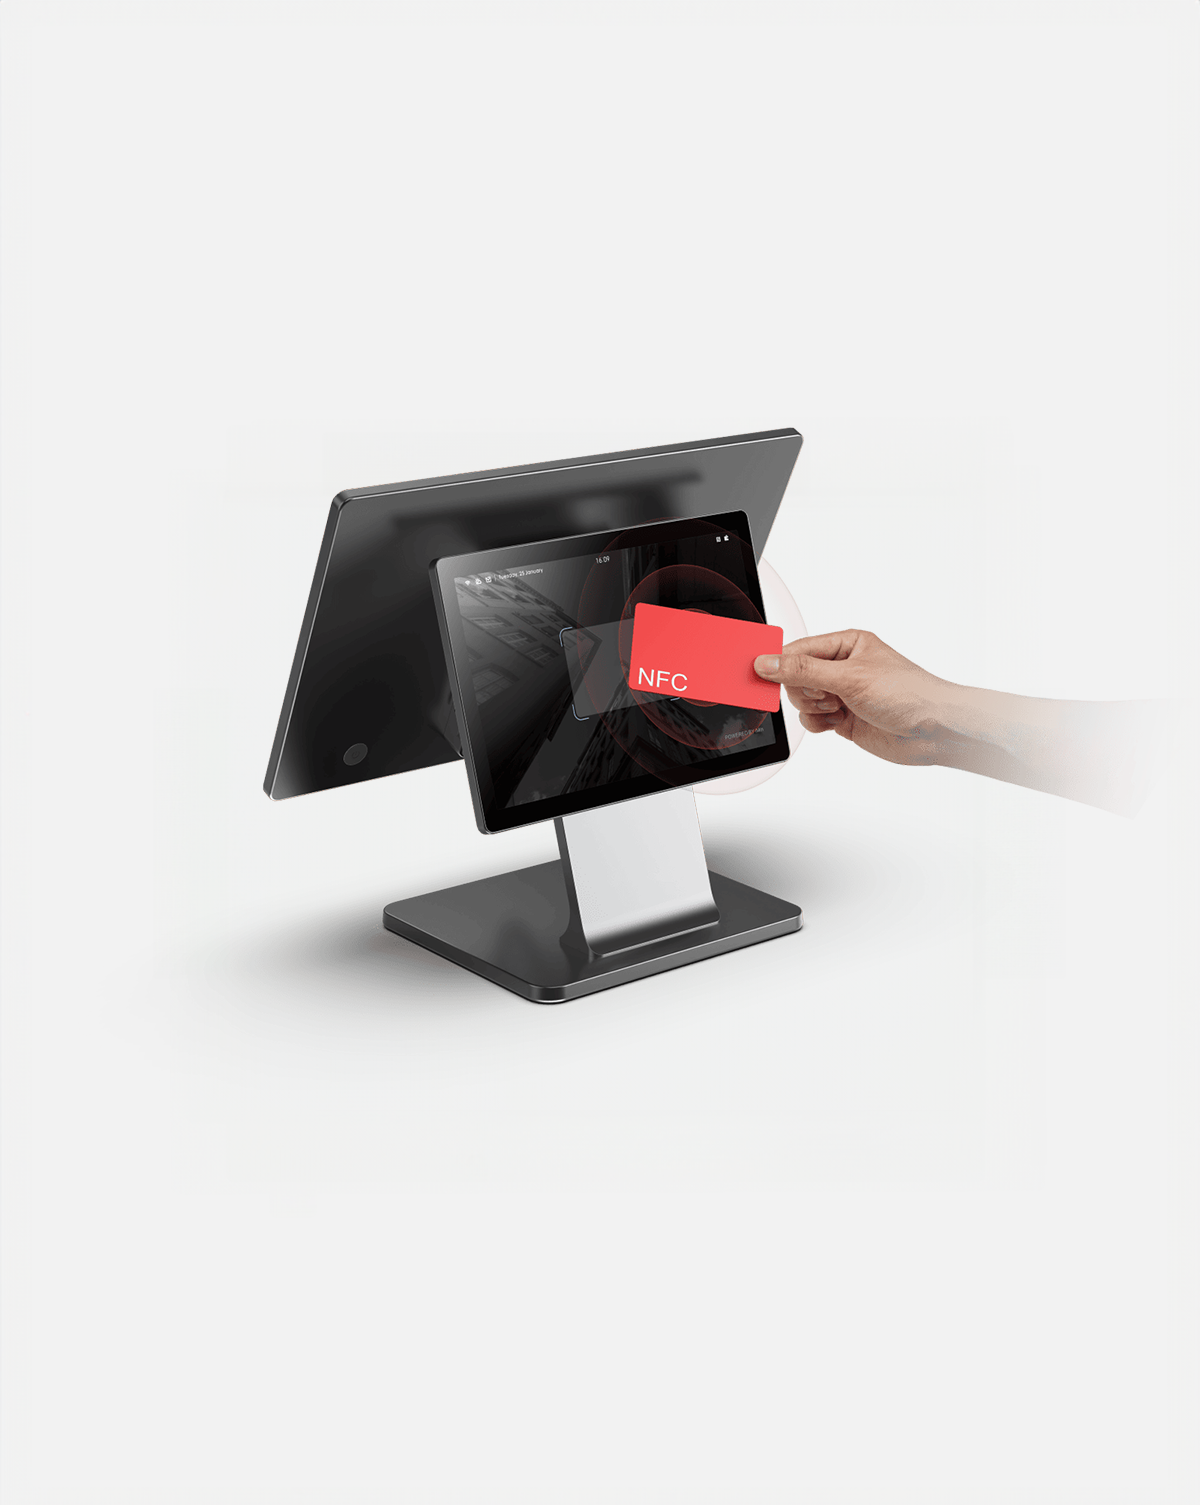 Customer Facing Display with NFC